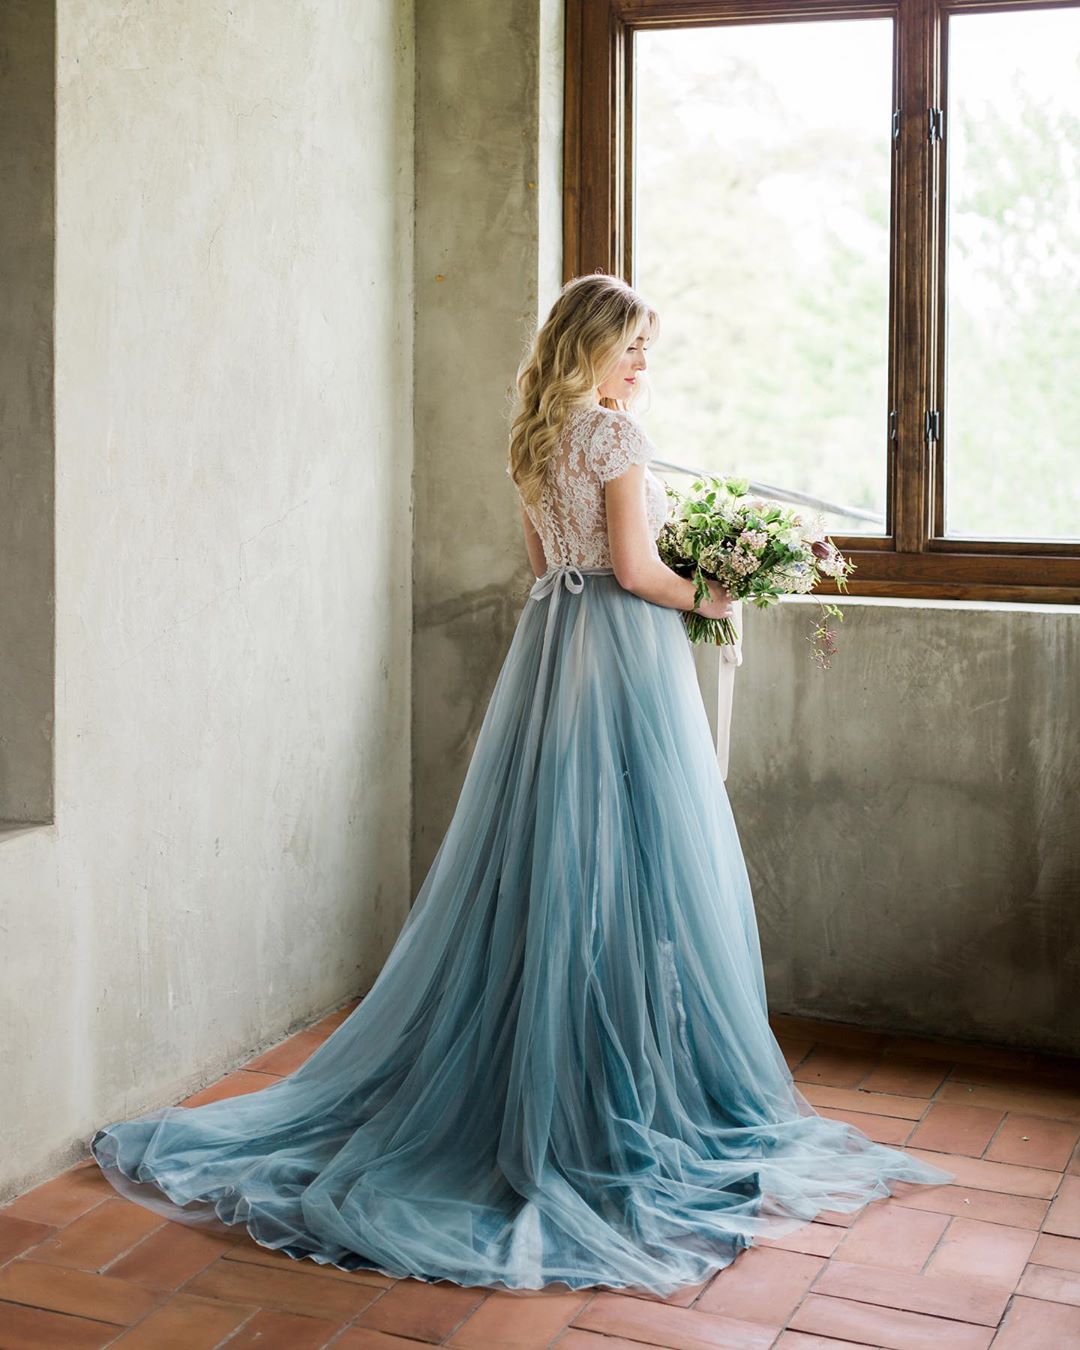 Vestido: Lea Ann Belter/ Kelly's Closet Bridal | Foto: 